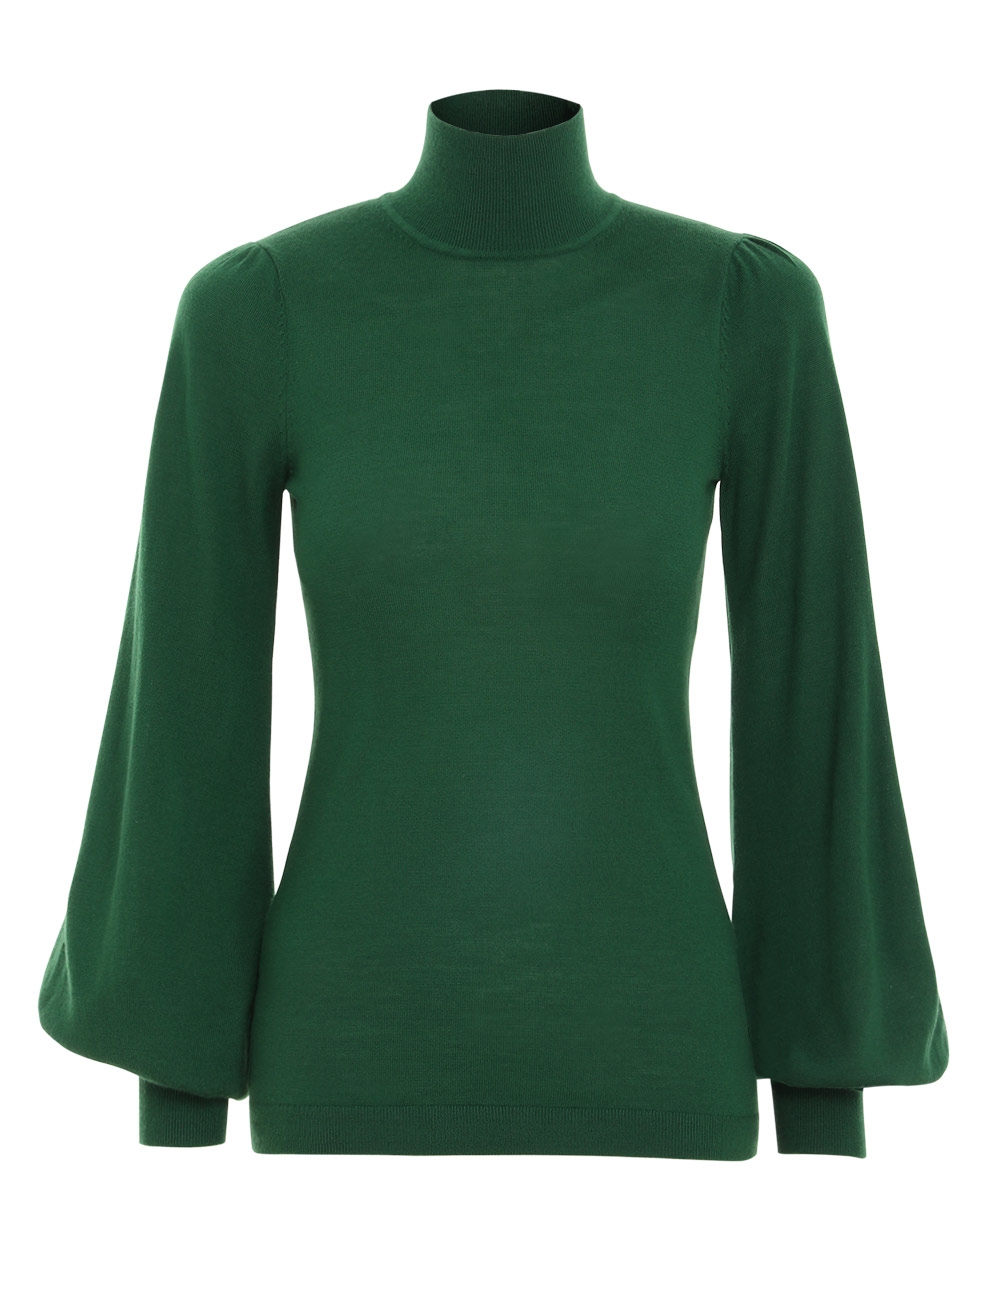 discount 93% KIDS FASHION Jumpers & Sweatshirts Hoodless Green 140                  EU Roxy sweatshirt 